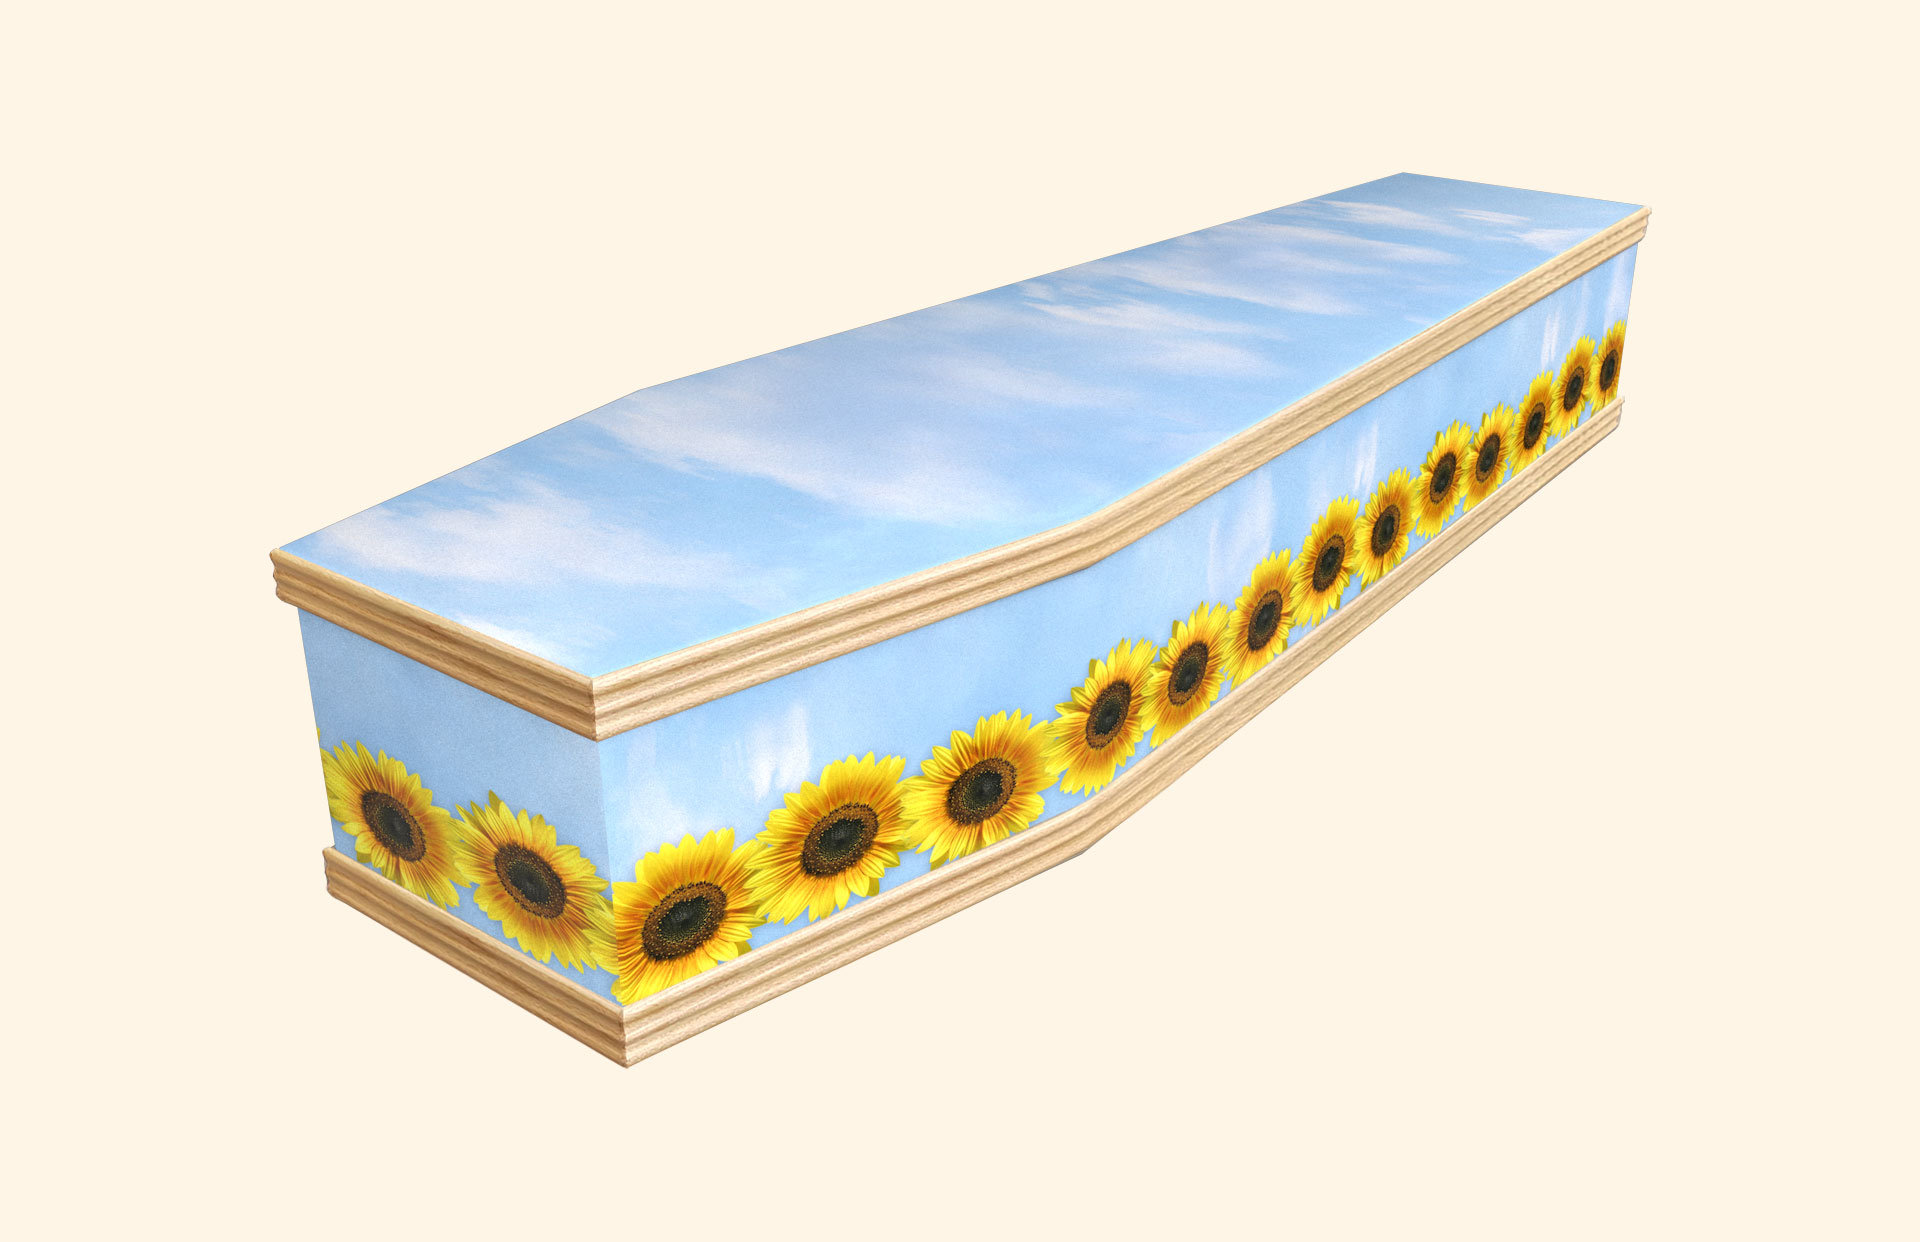 Sunflower Sky design on a classic coffin